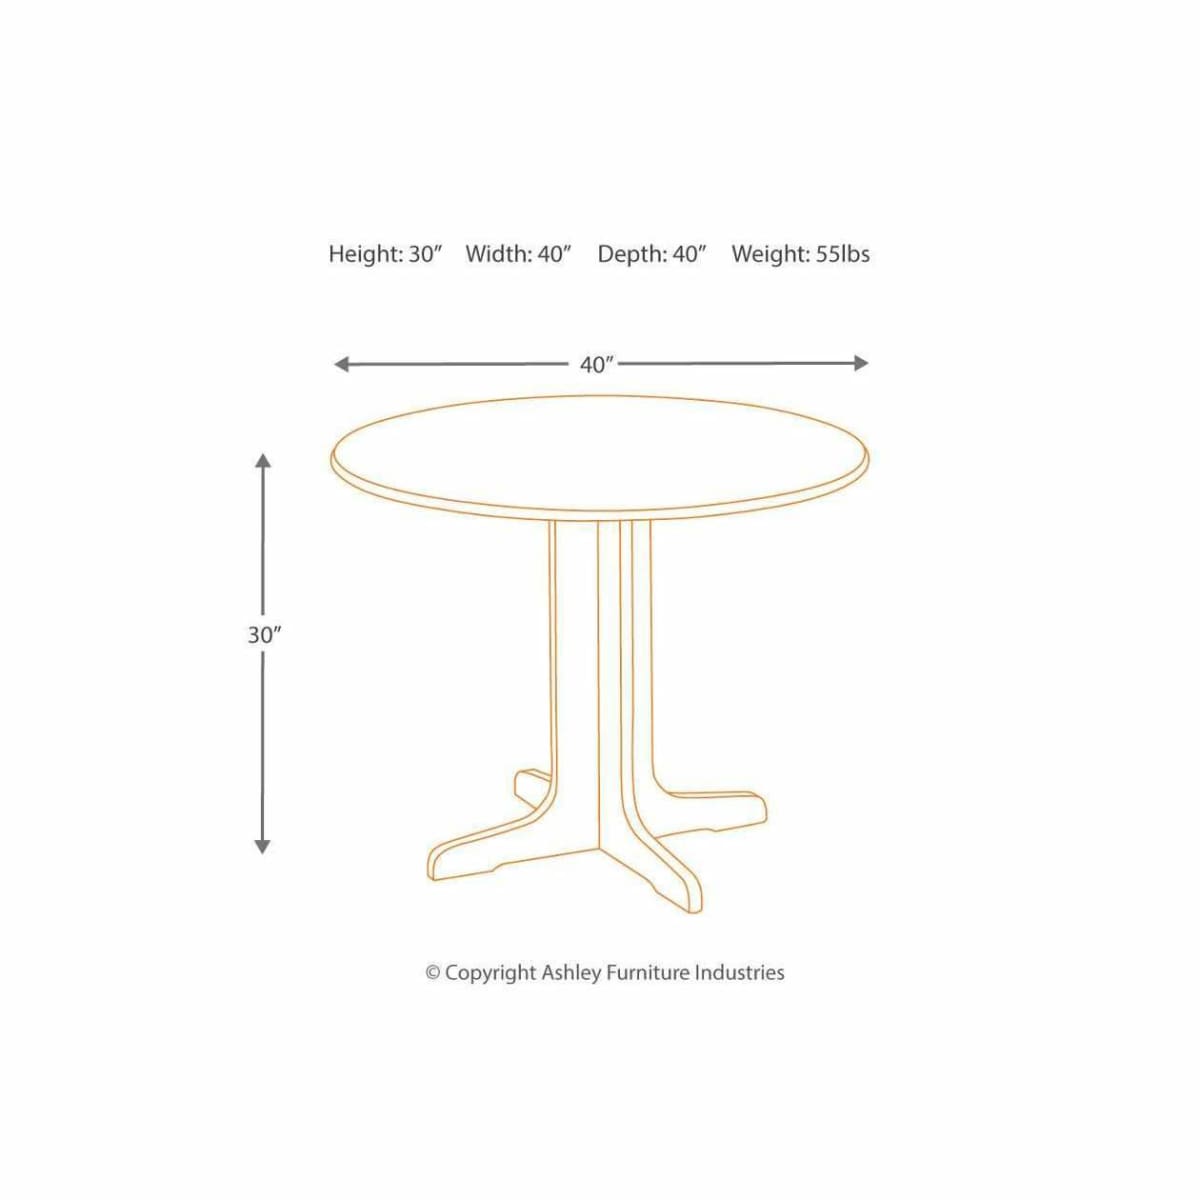 Stuman Dining Room Table Set - DININGCOUNTERHEIGHT